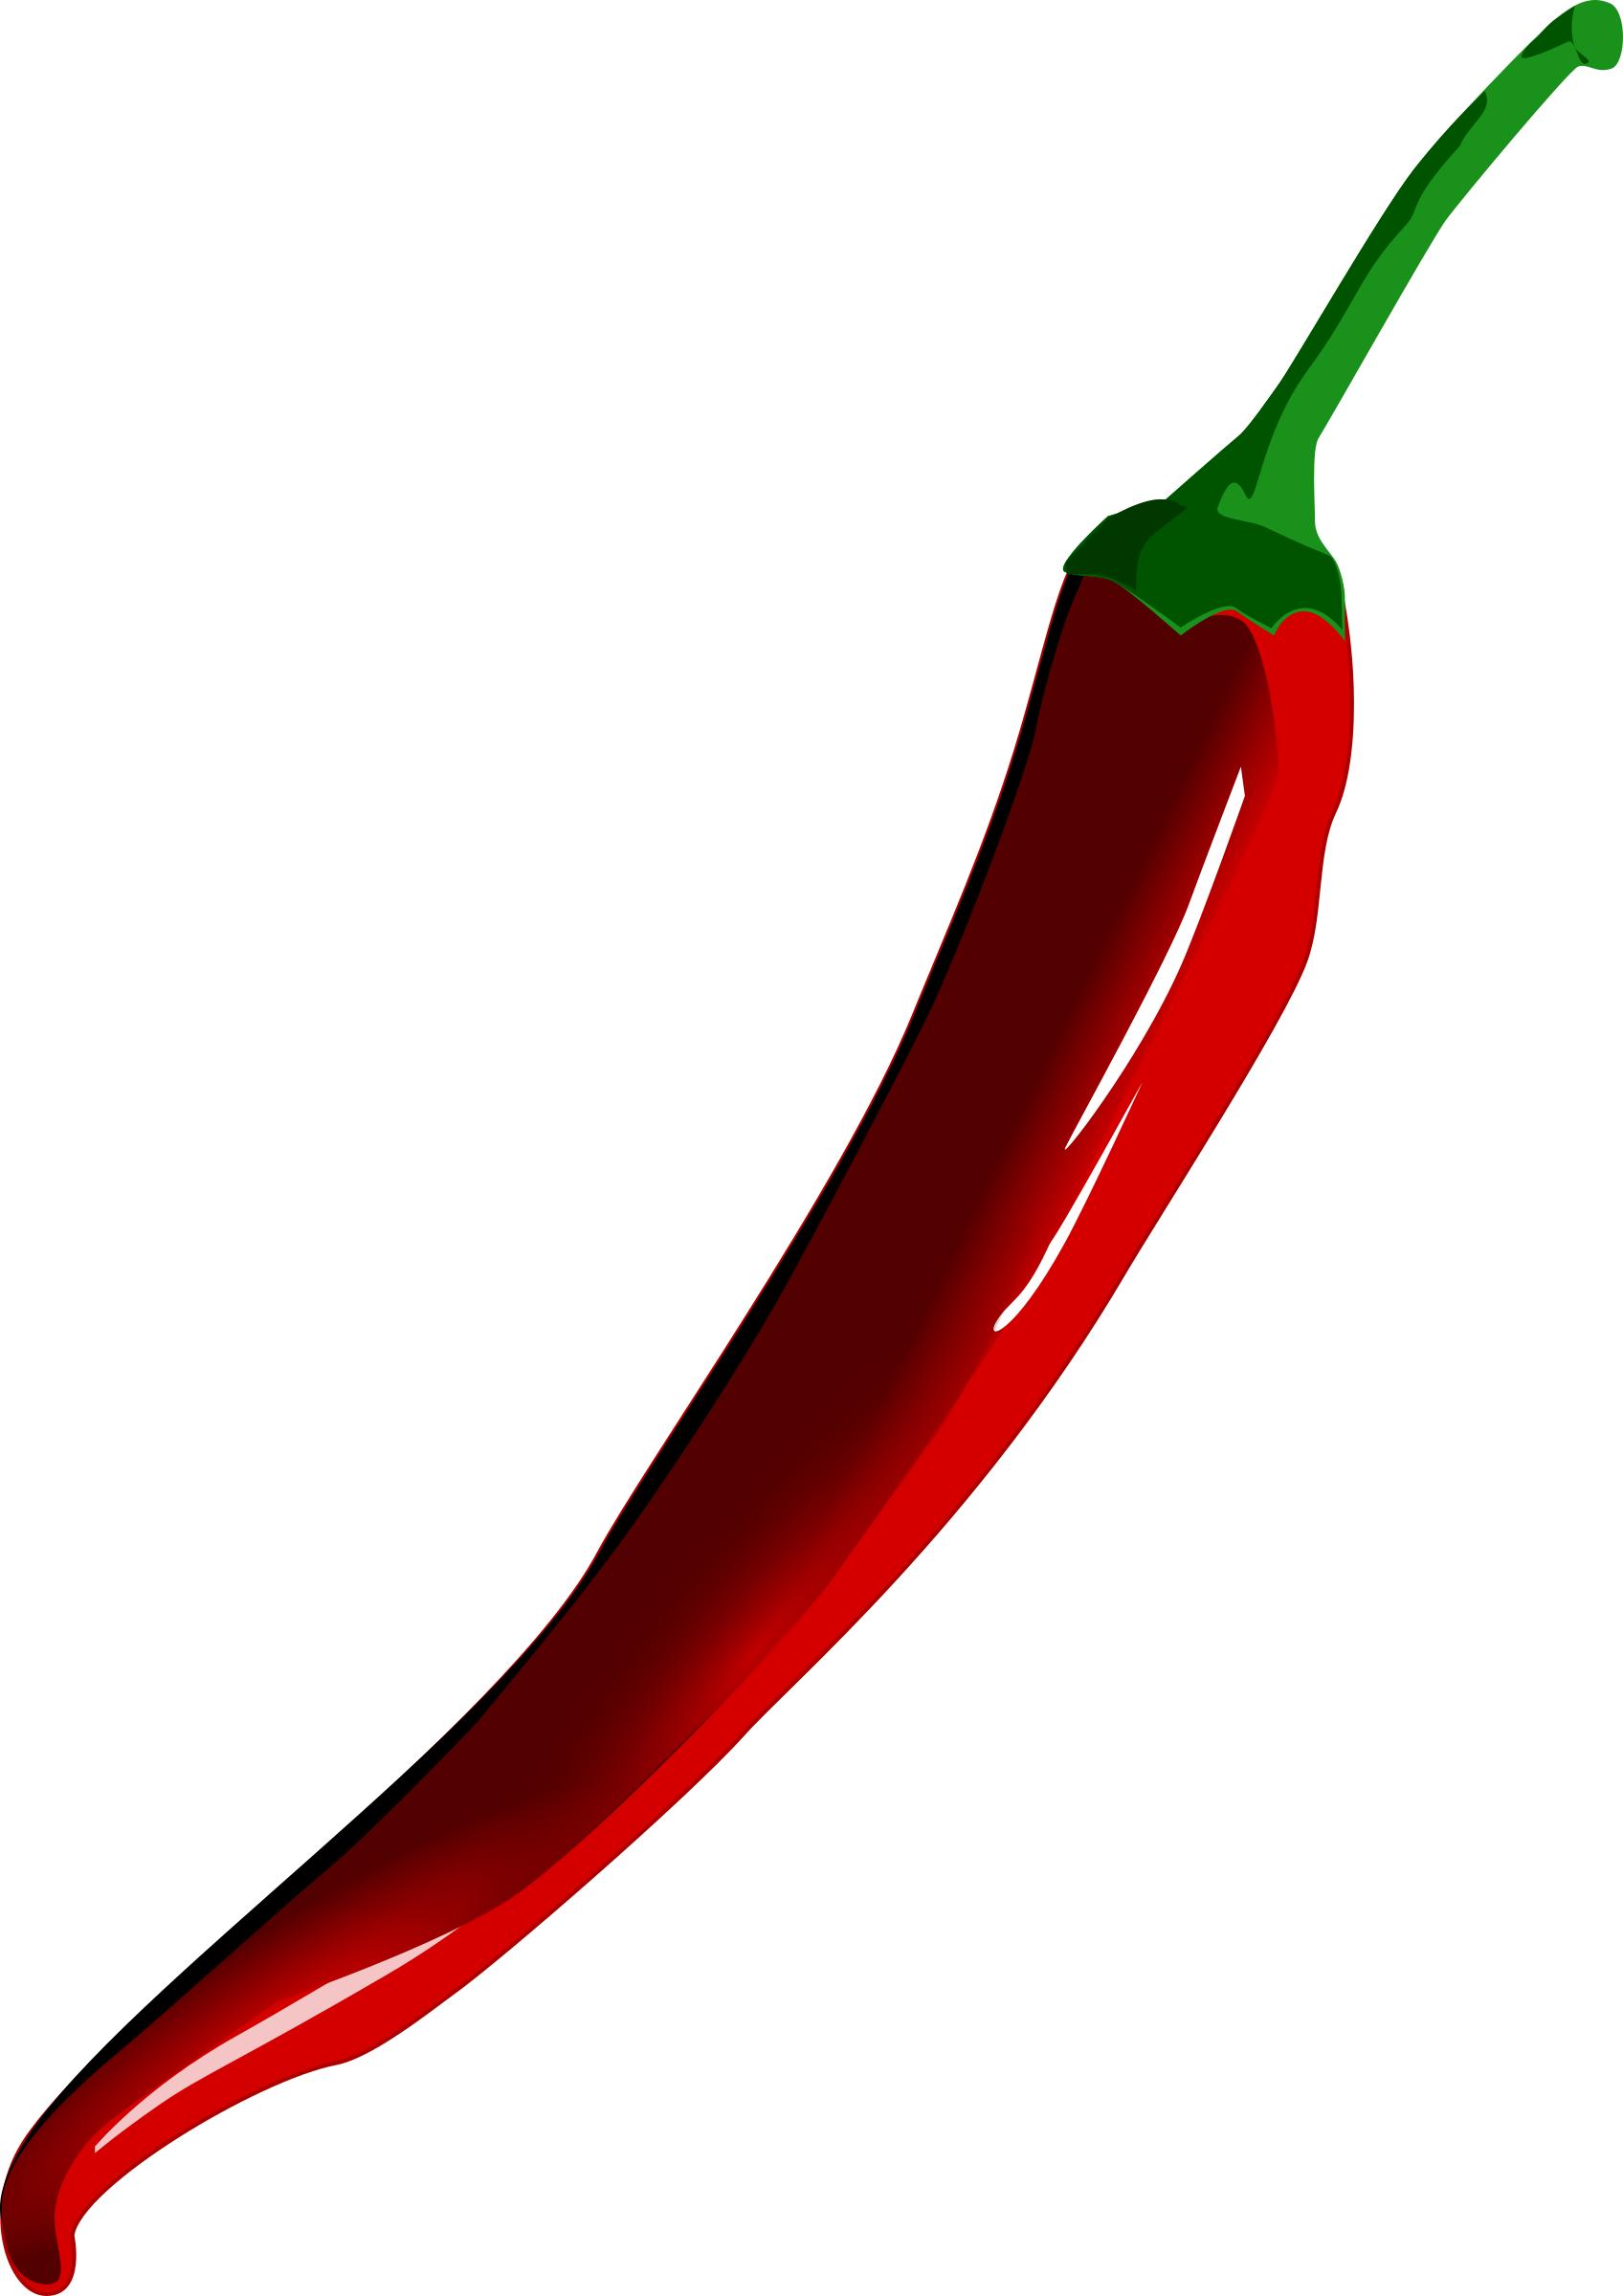 Chili pepper png